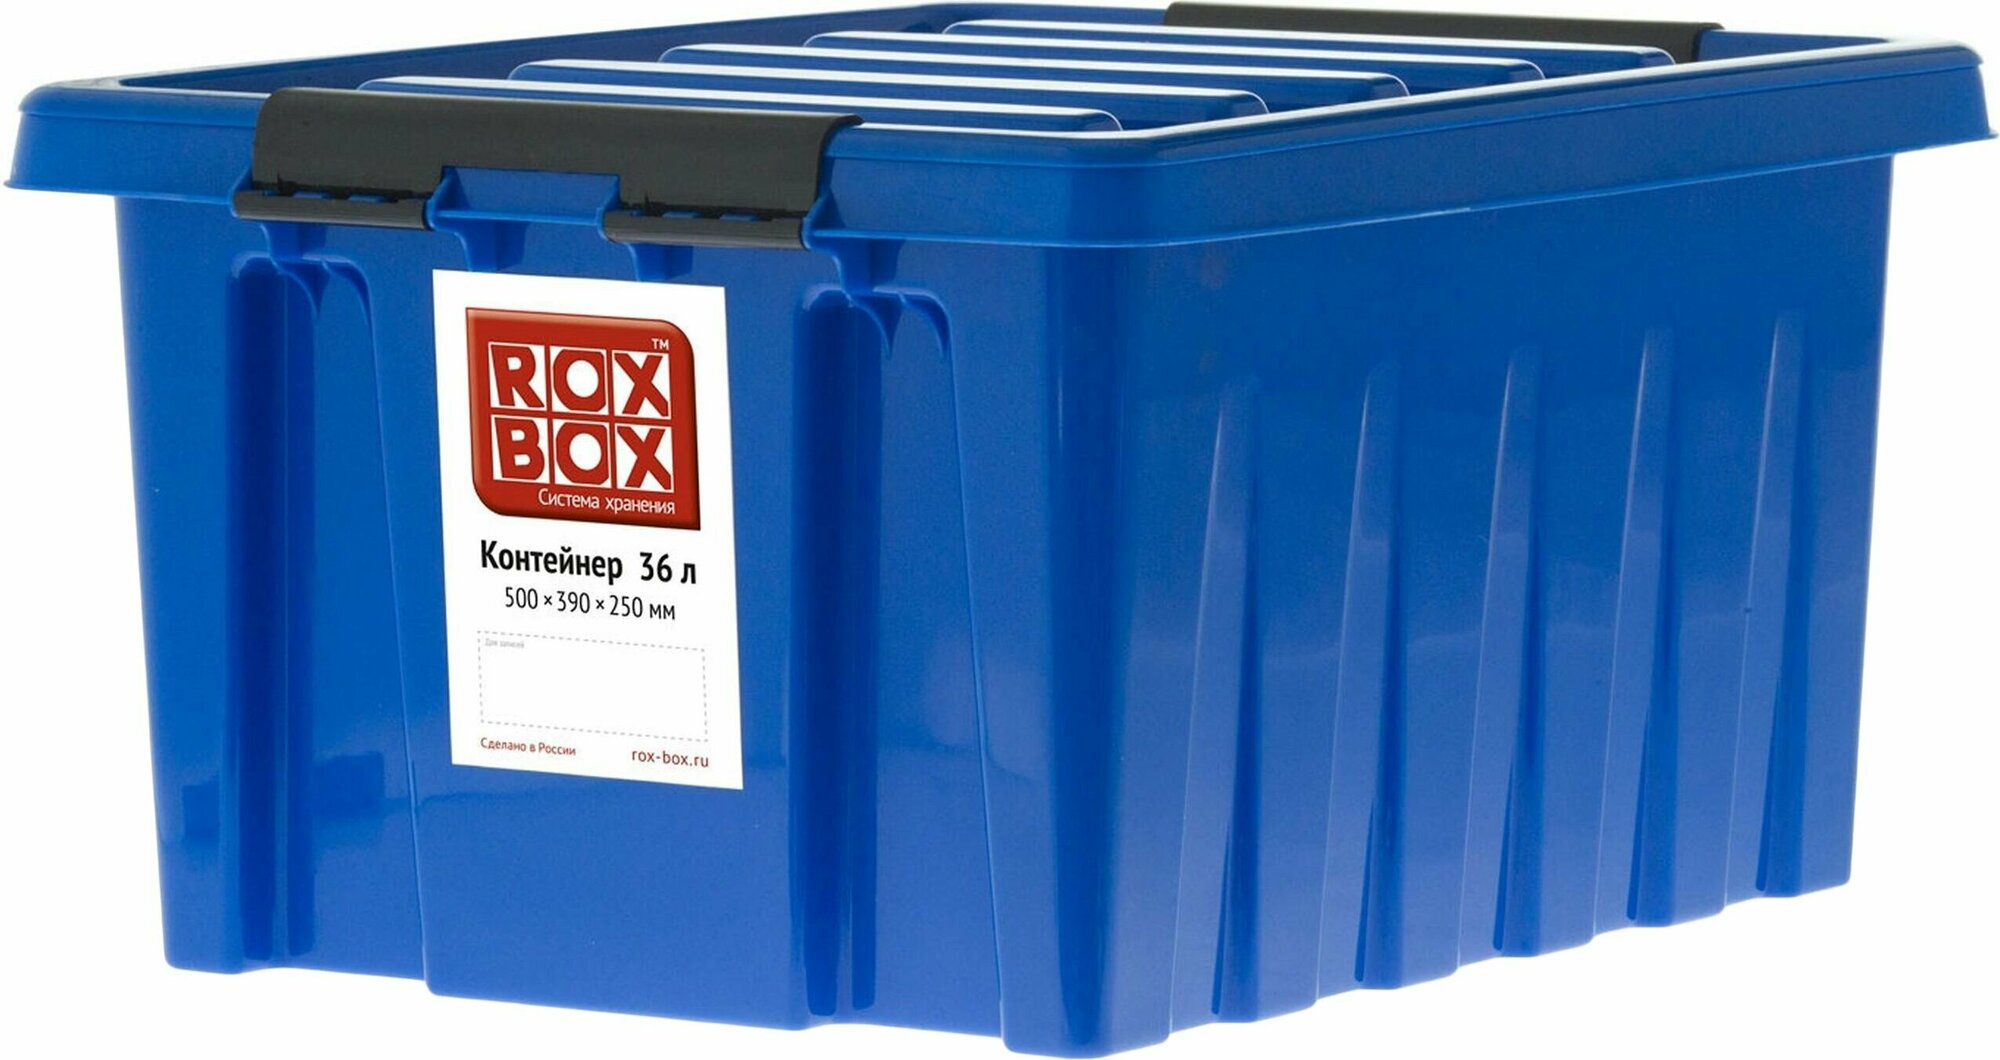 Контейнер для хранения с крышкой ROX BOX полипропилен 390х500х250 мм 36 л